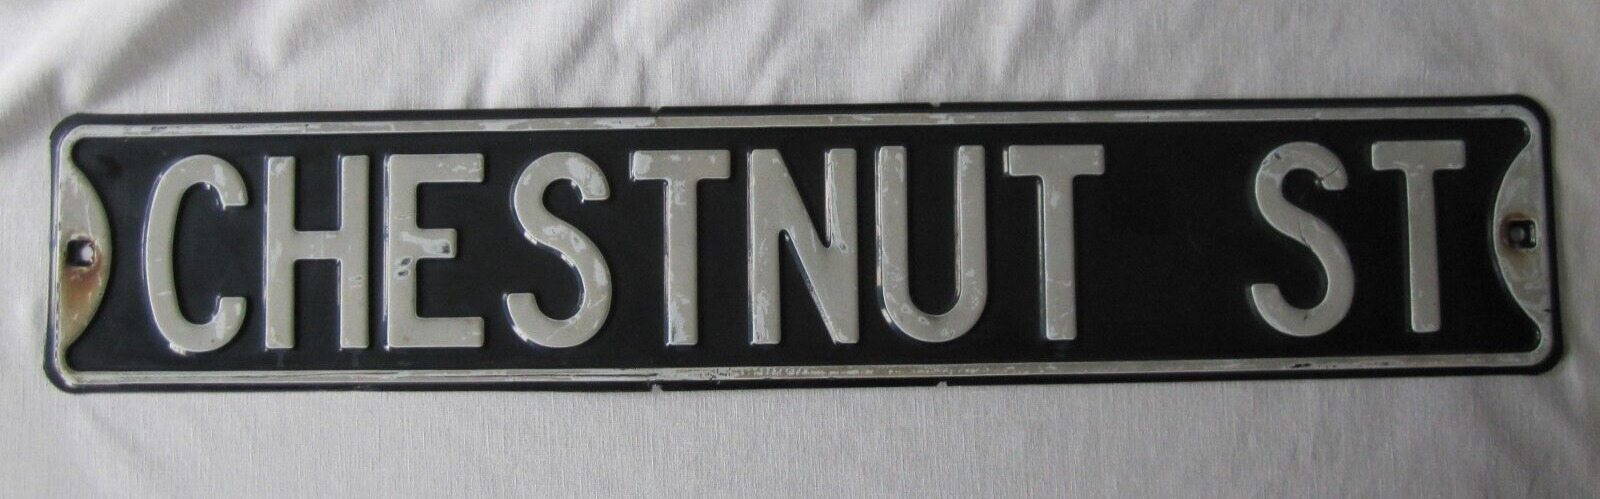 Org. Authentic Vtg 1950s CHESTNUT ST Steel Embossed Street Sign Man Cave Rat Rod